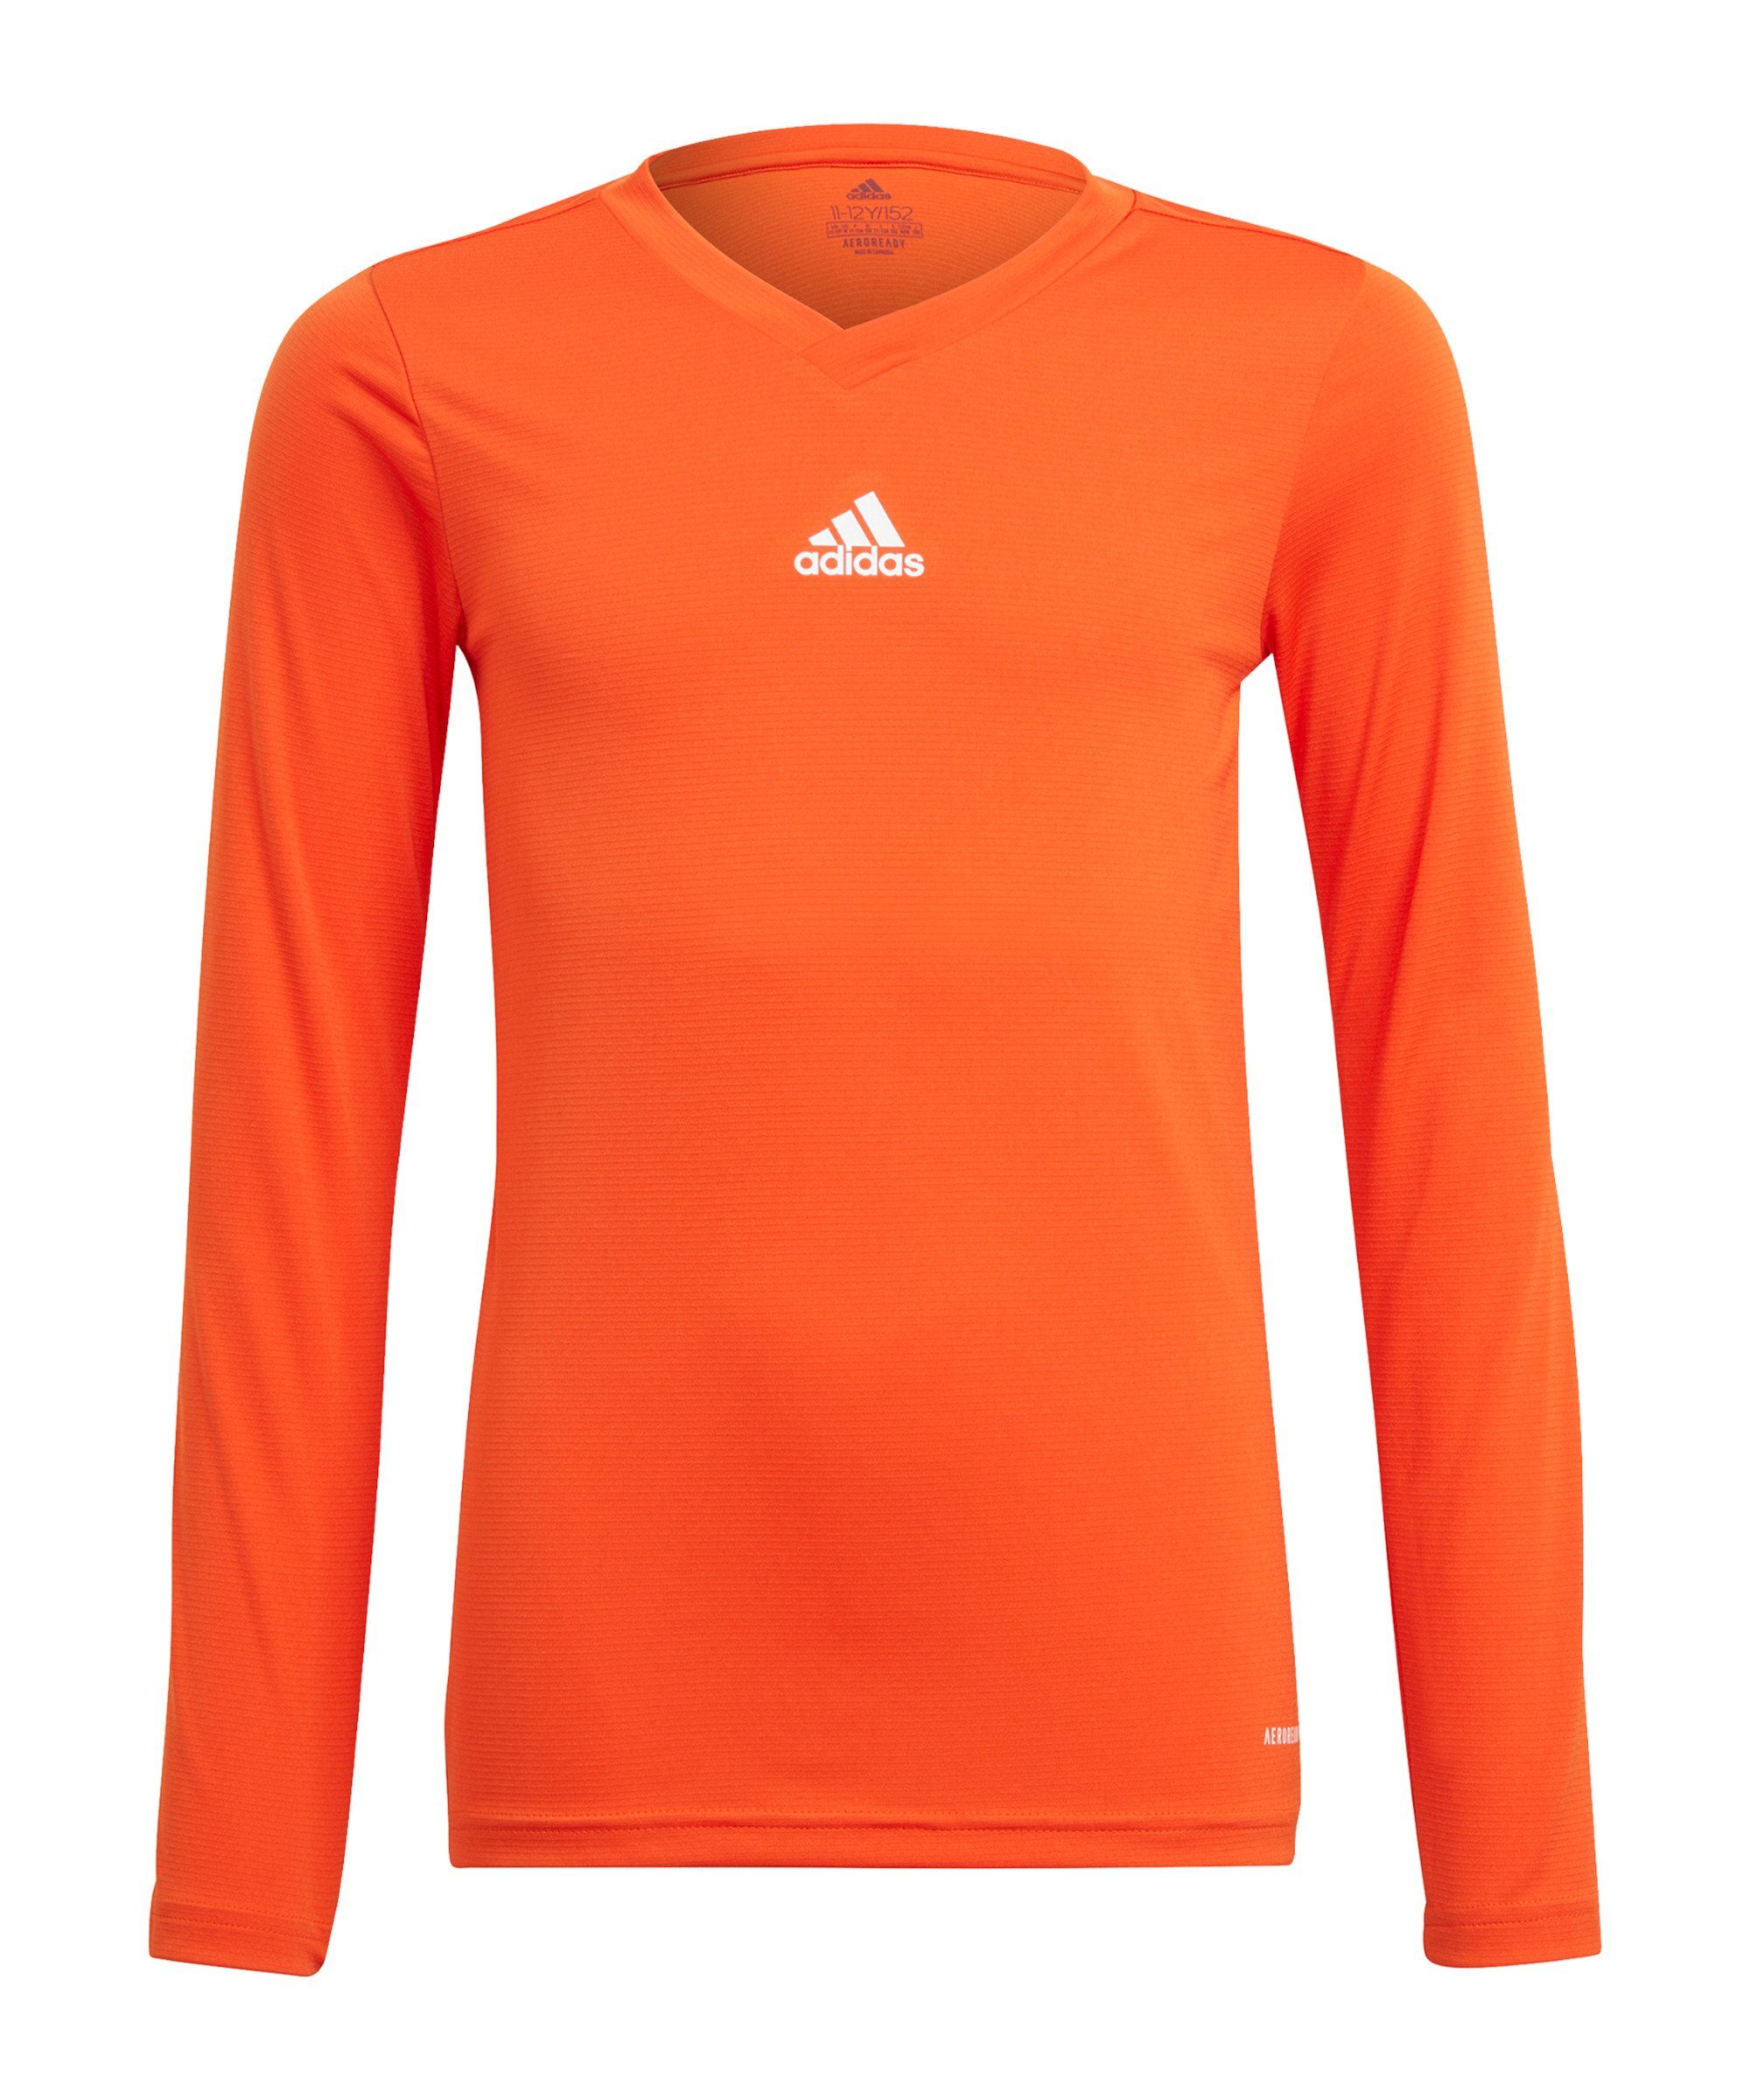 adidas Performance Funktionsshirt Team Base Top langarm Kids Dunkel default orange | Funktionsshirts